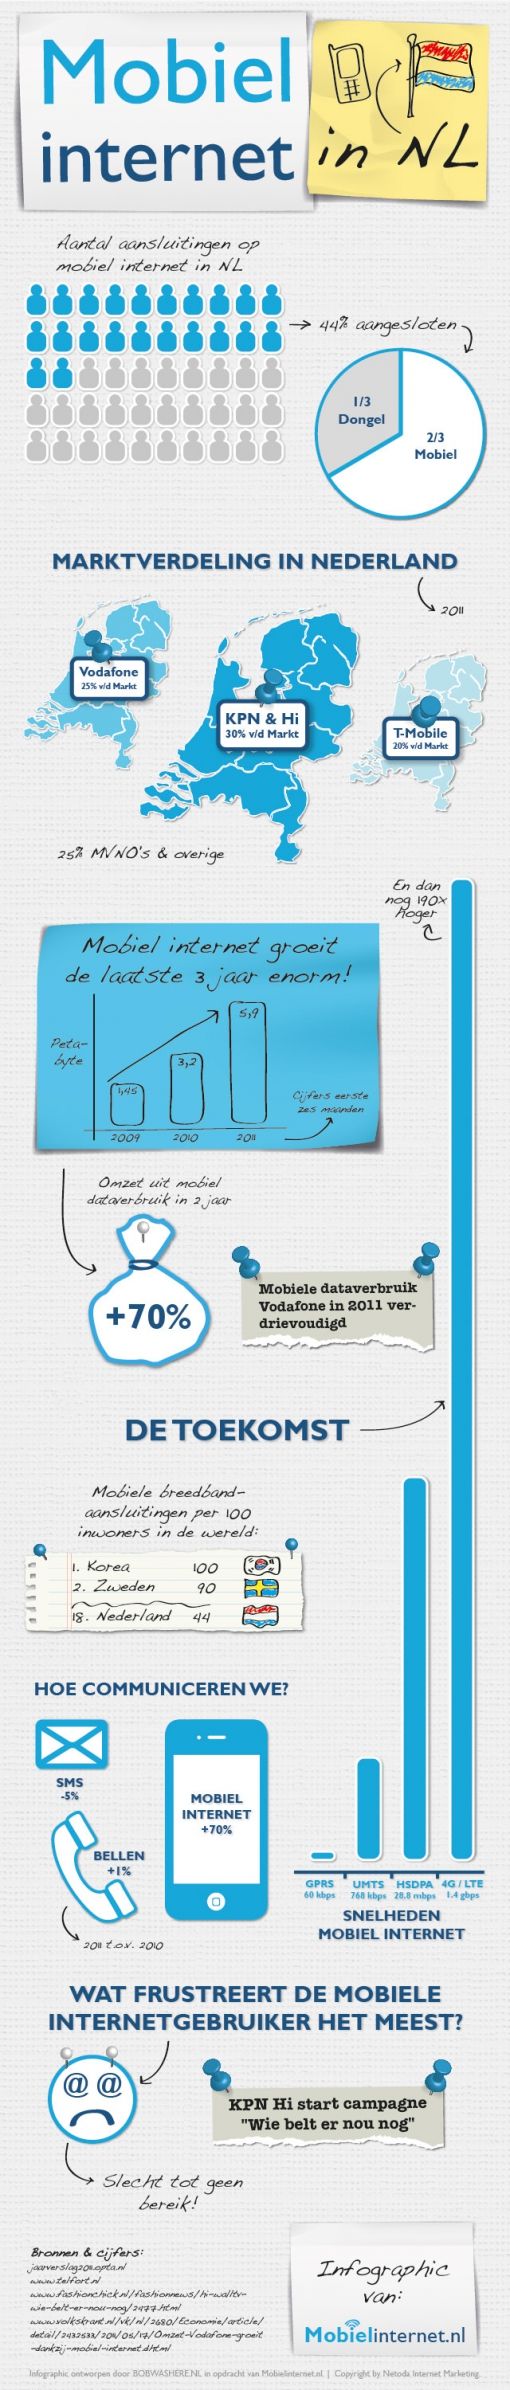 infographic-mobiel-internet-2012.jpg